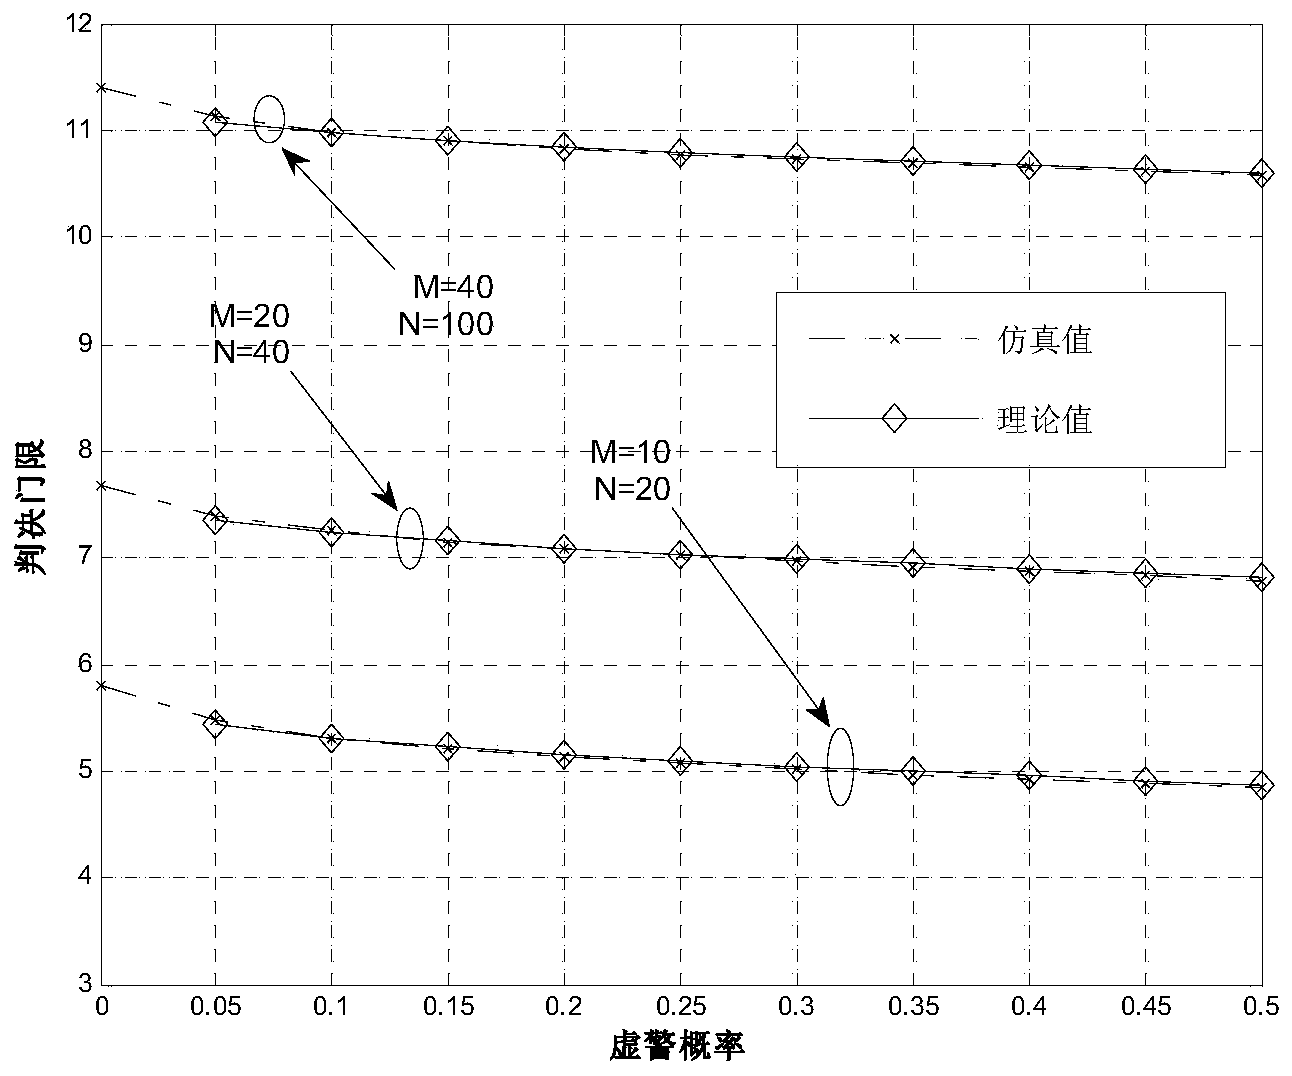 Cooperative spectrum detection method based on Cholesky matrix decomposition and eigenvalue